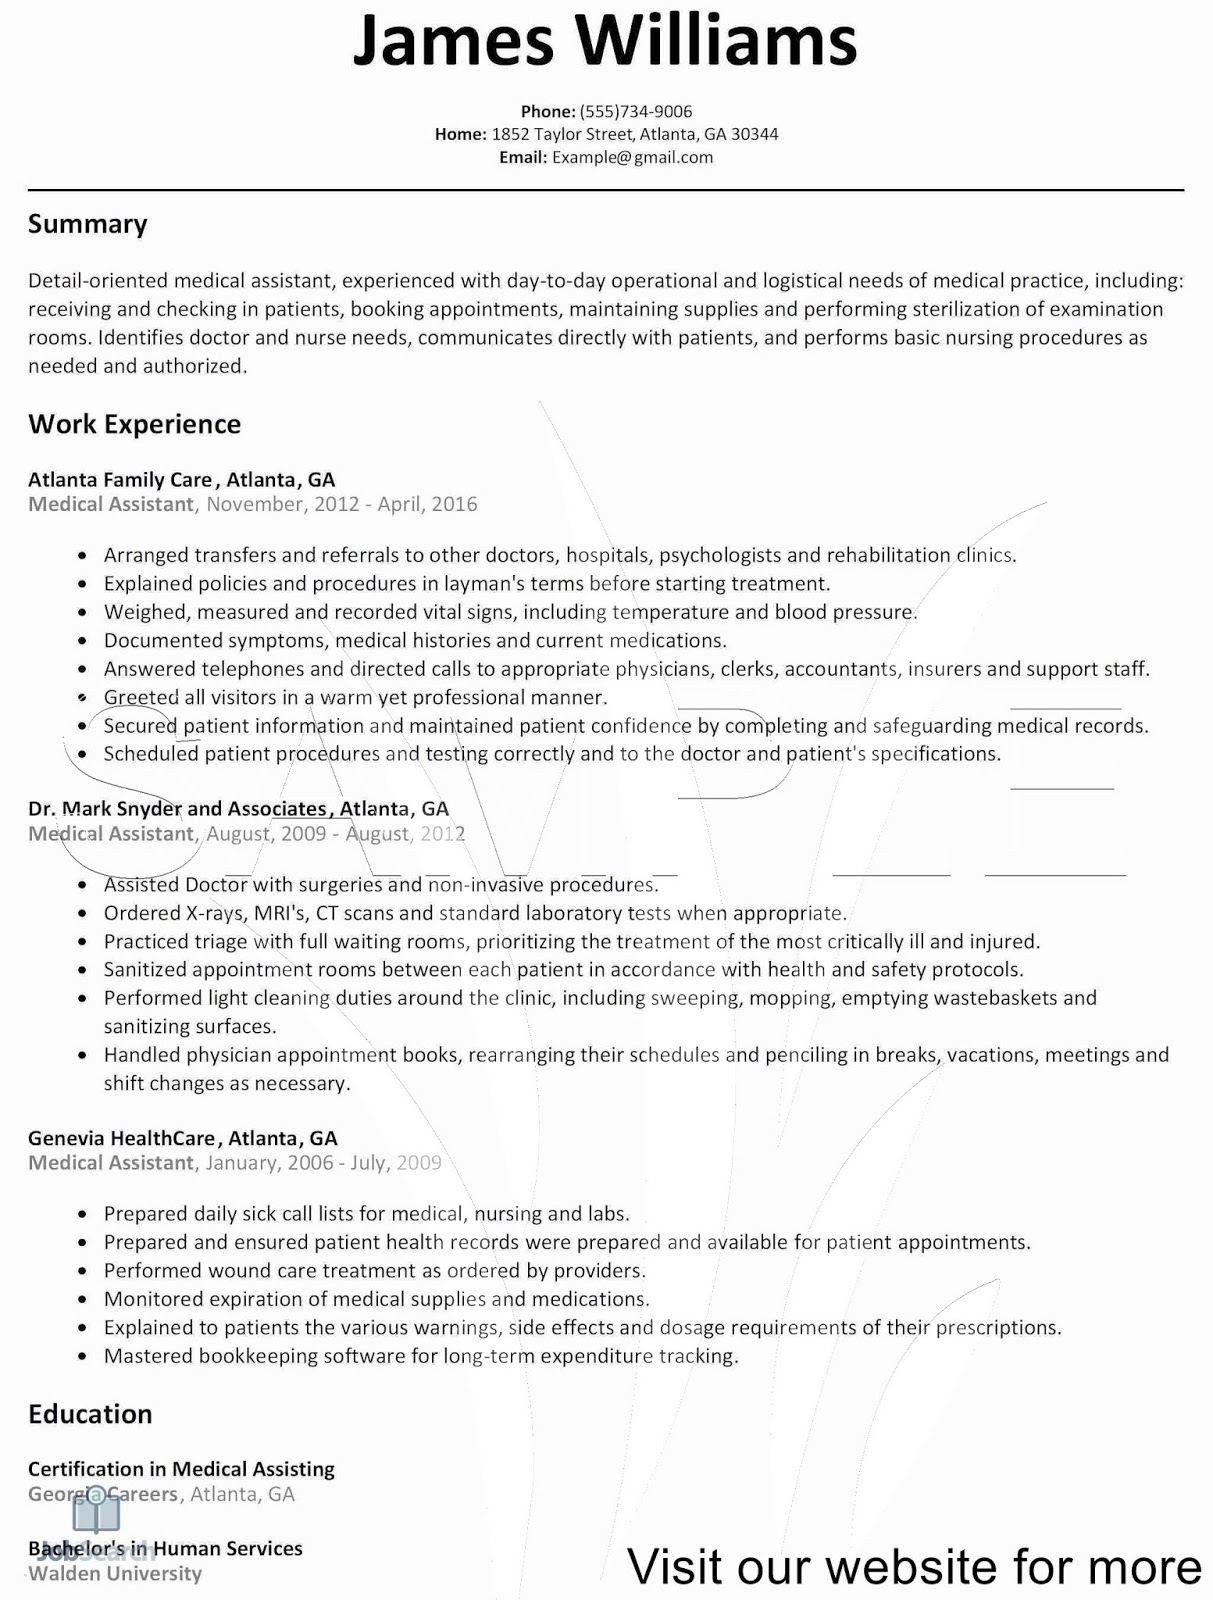 resume format free download resume format free download australia resume format free download in ms word